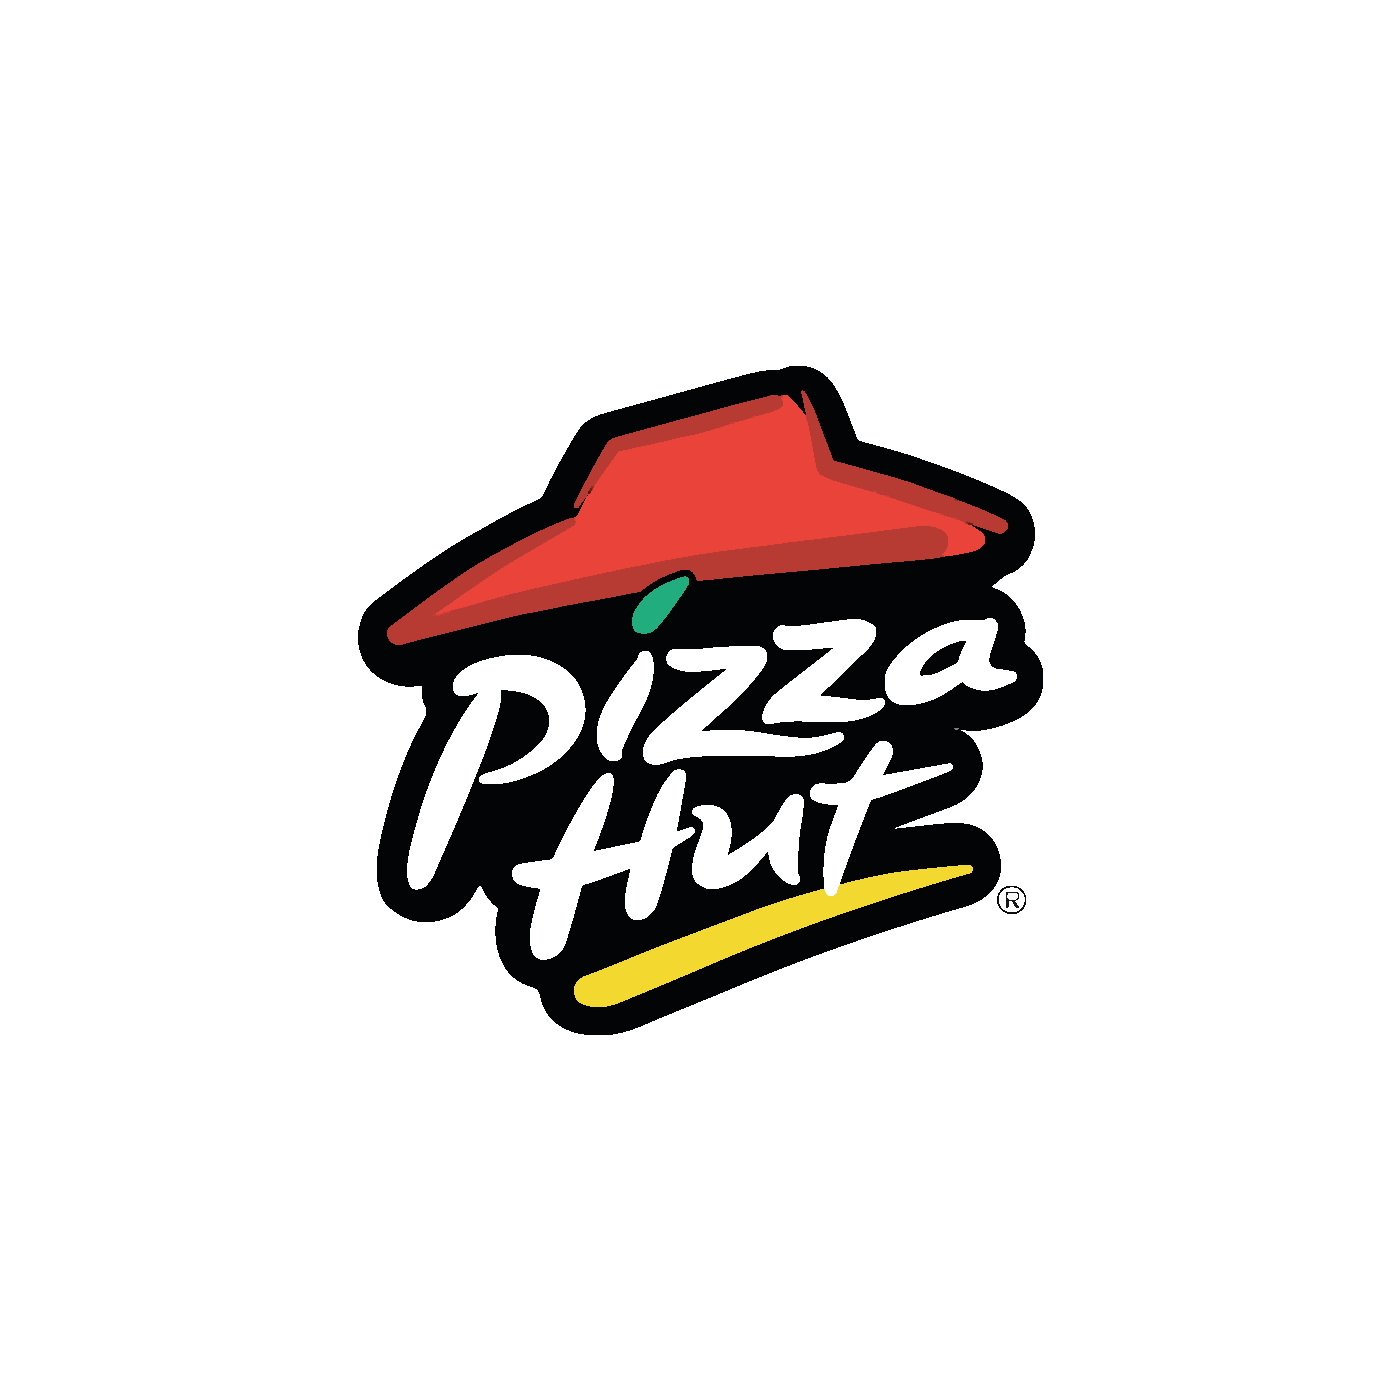 12 хат. Pizza Hut логотип. Pizza Hut logo. Pizza Hut Express logo. Аватарка Peppino pizza Tower.